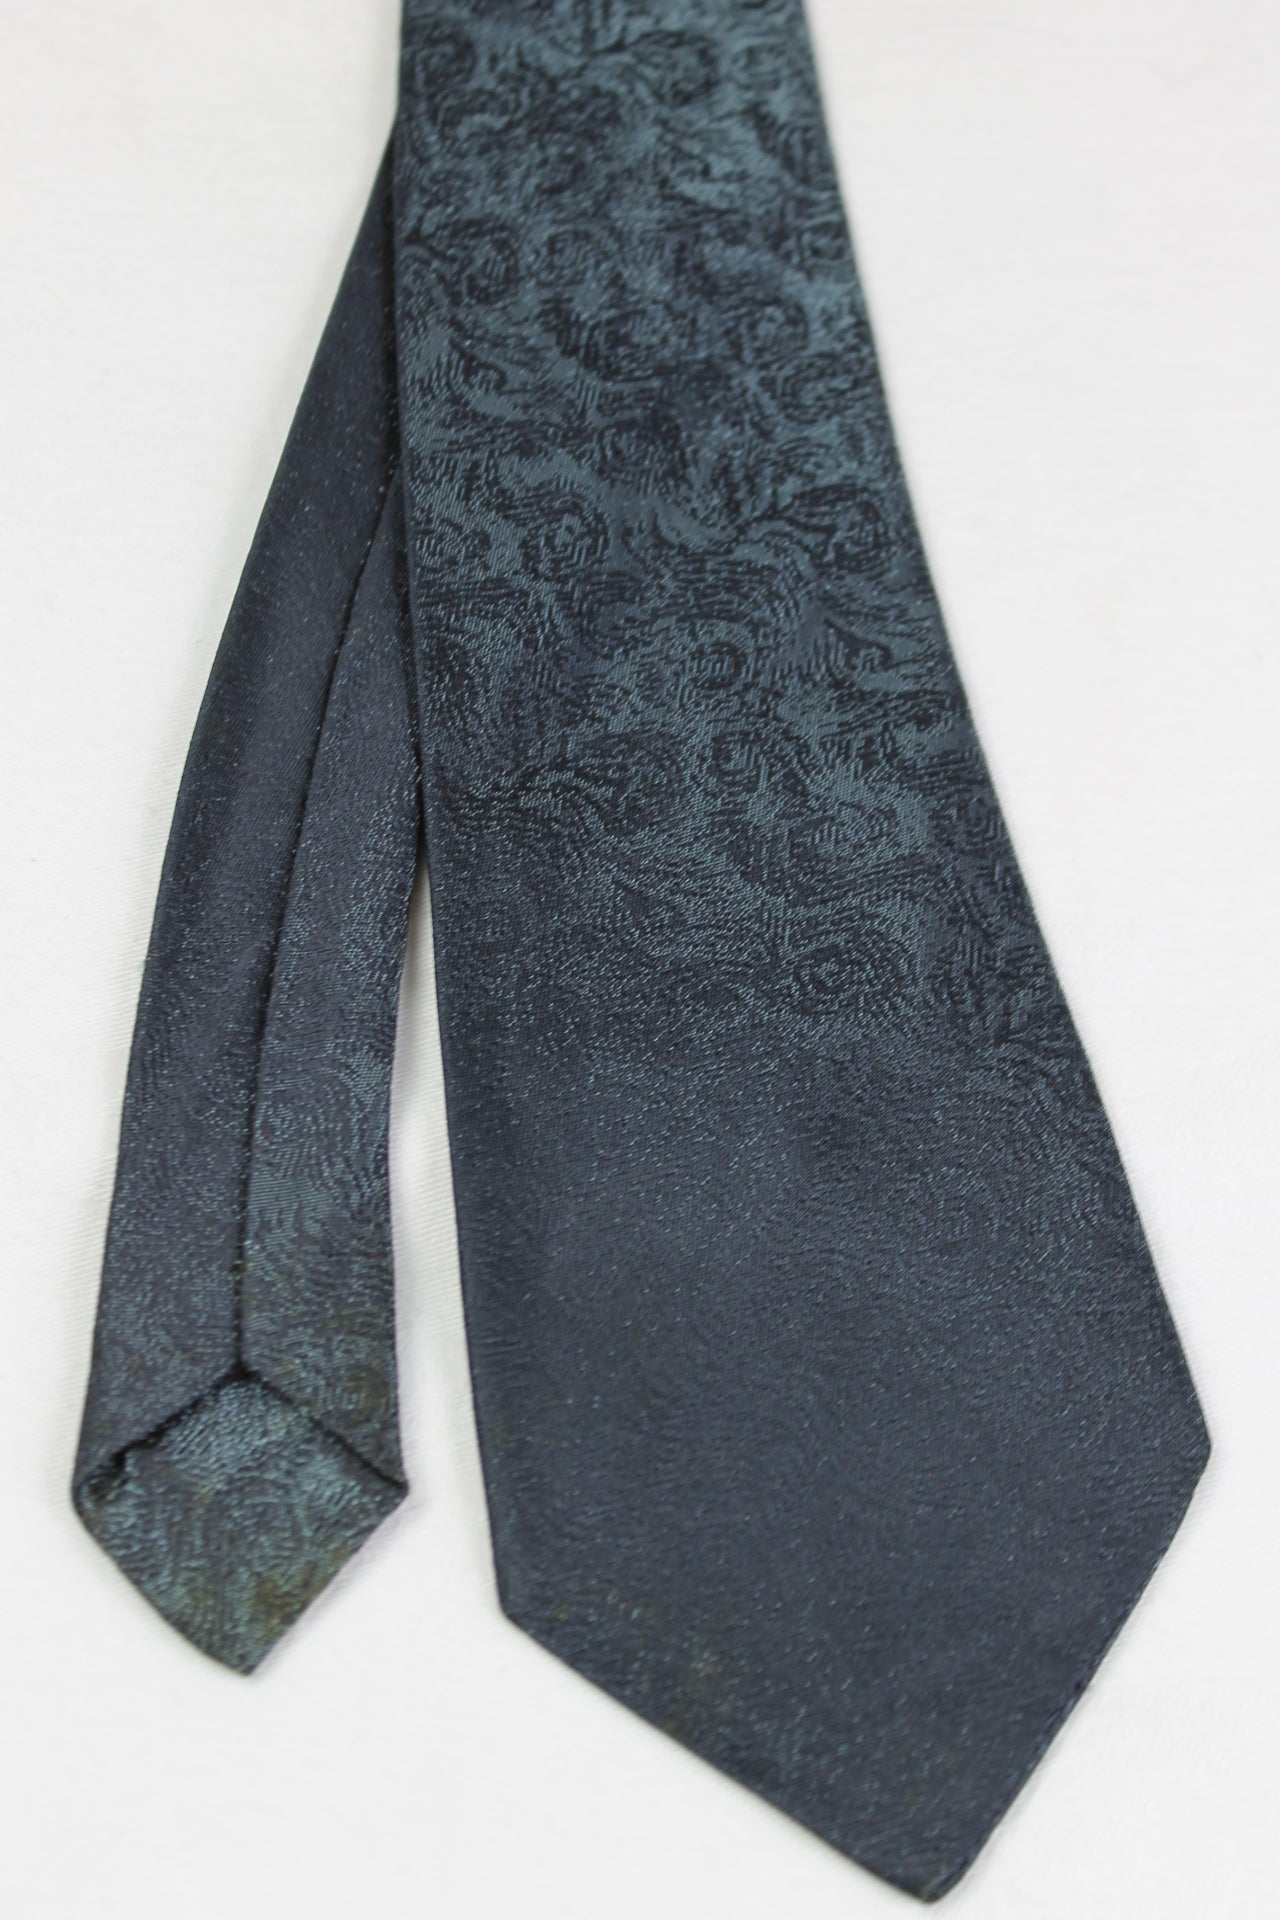 Vintage Regale Jacquard Blue Grey Skinny Tie 1960s